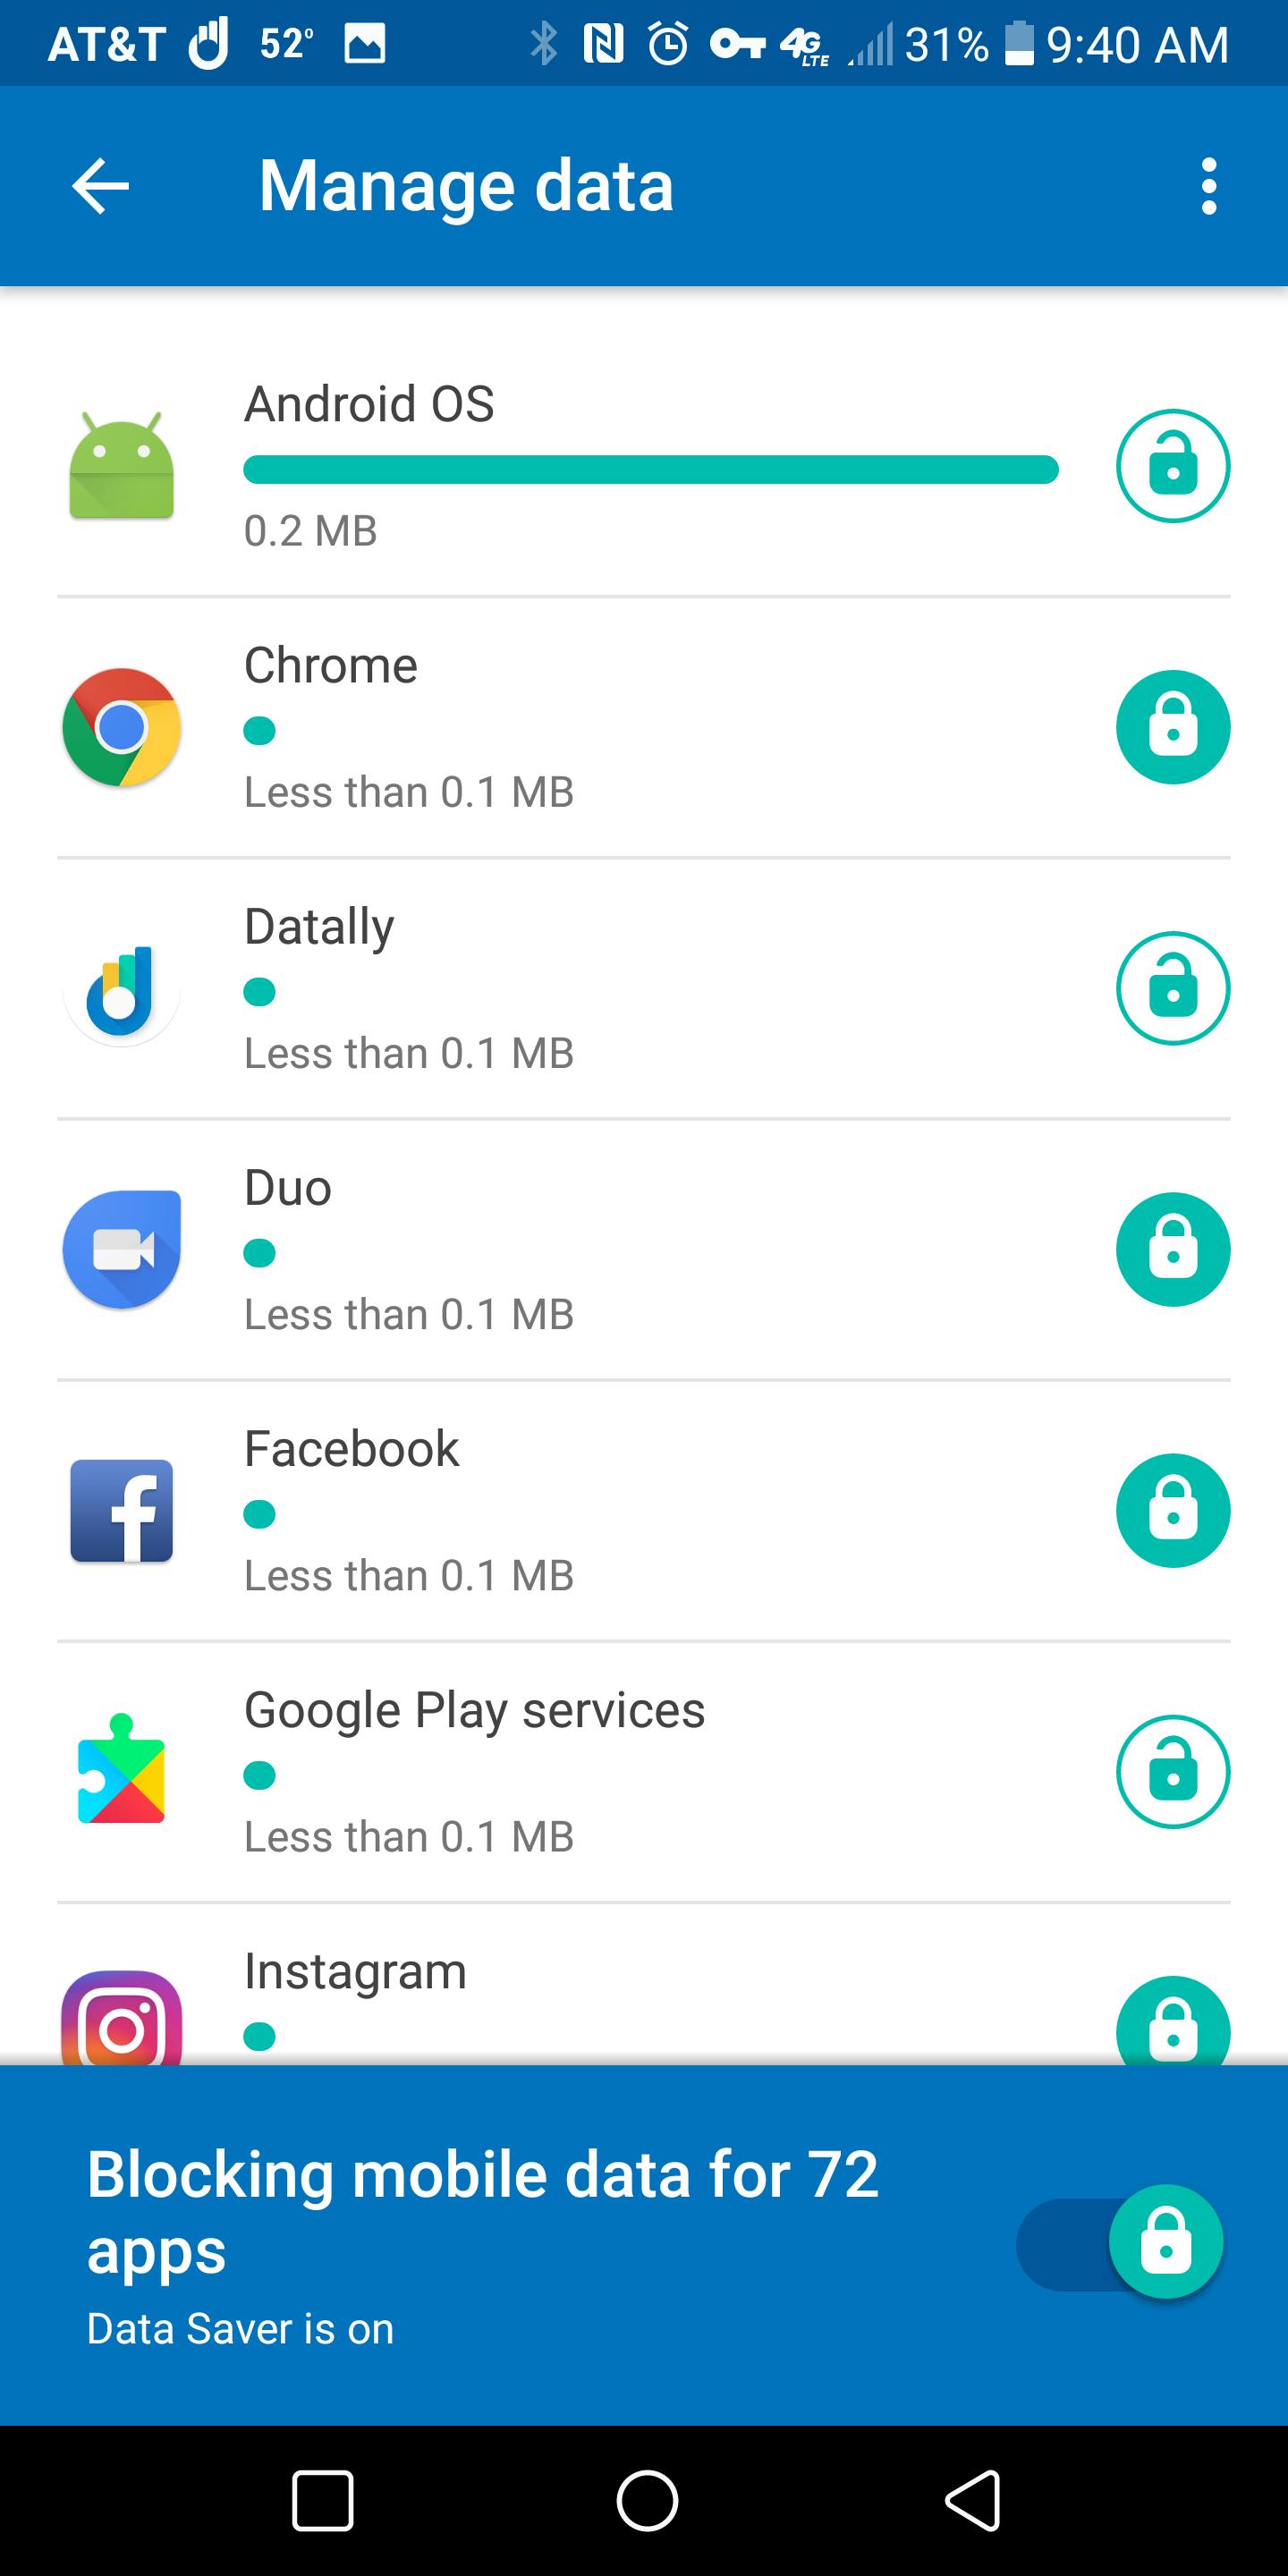 datally data monitoring google app